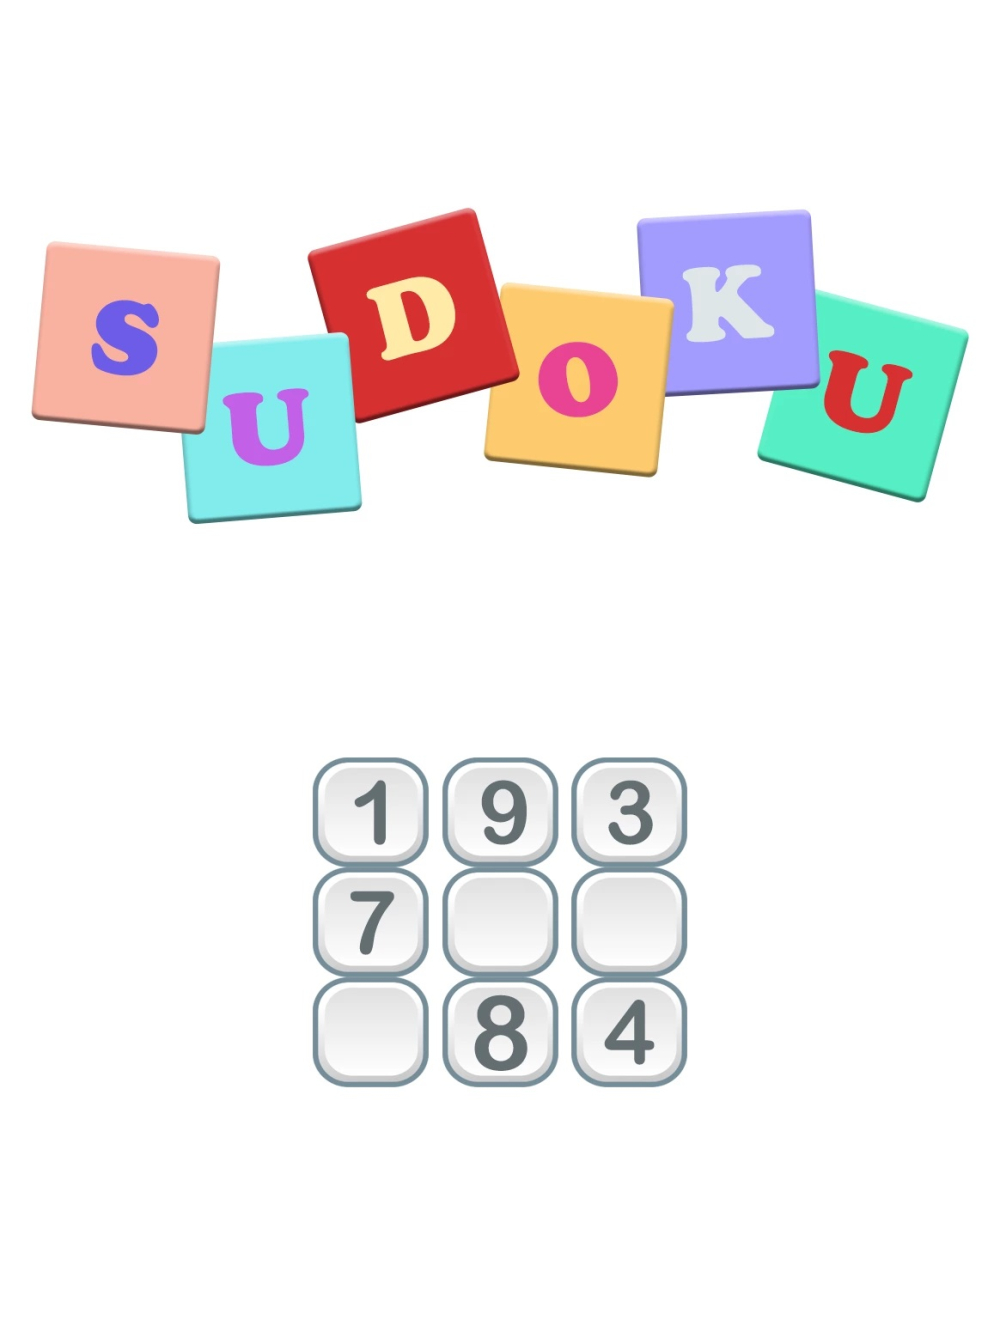 Game development of Sudoku